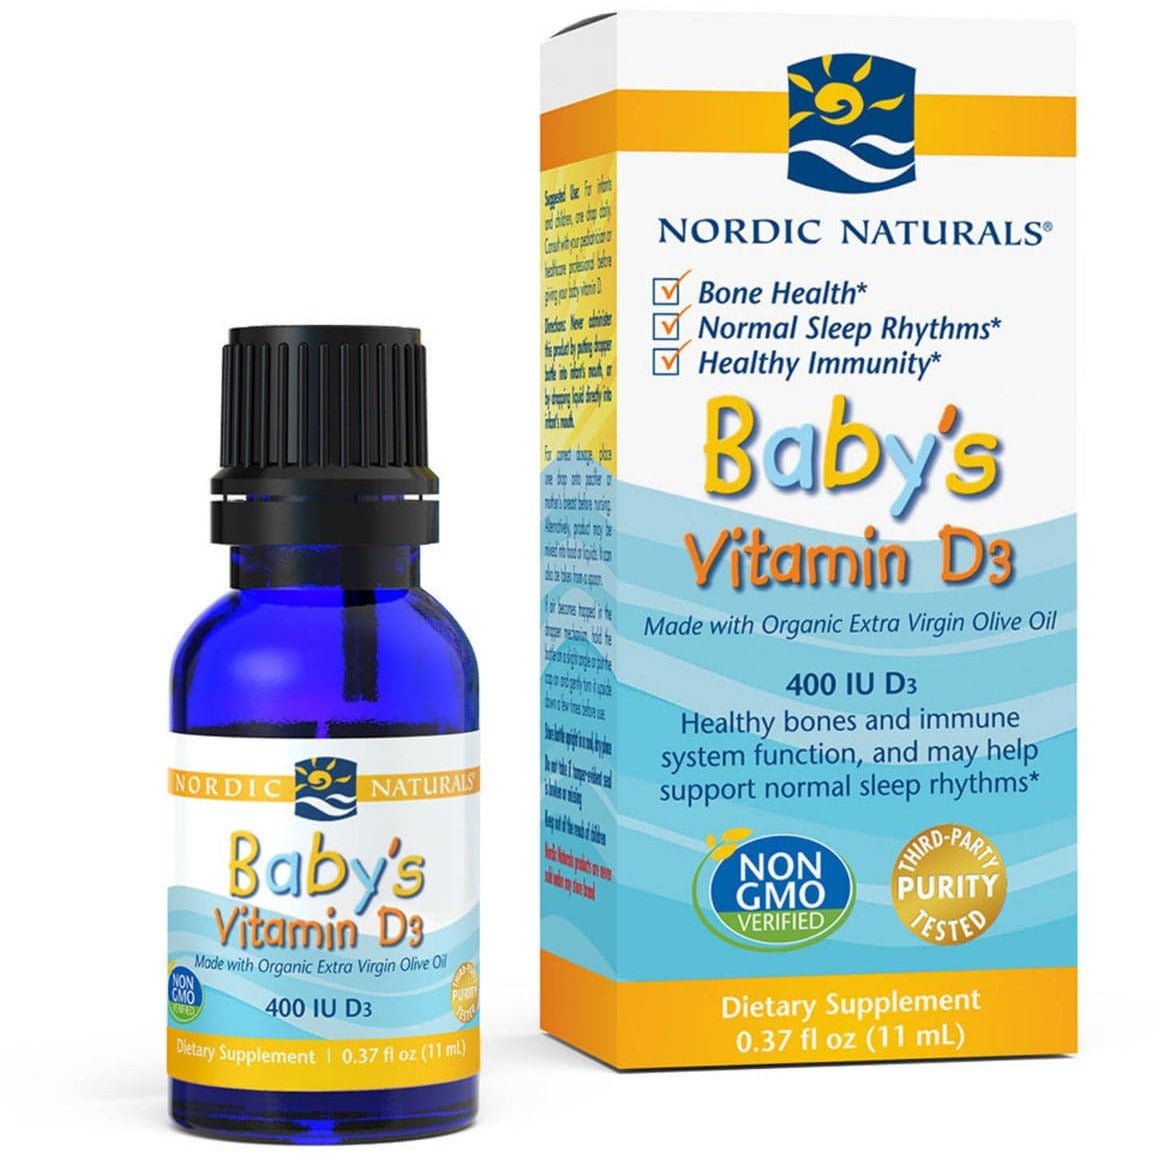 Nordic Naturals Baby's Vitamin D3 - Sklep Witaminki.pl.